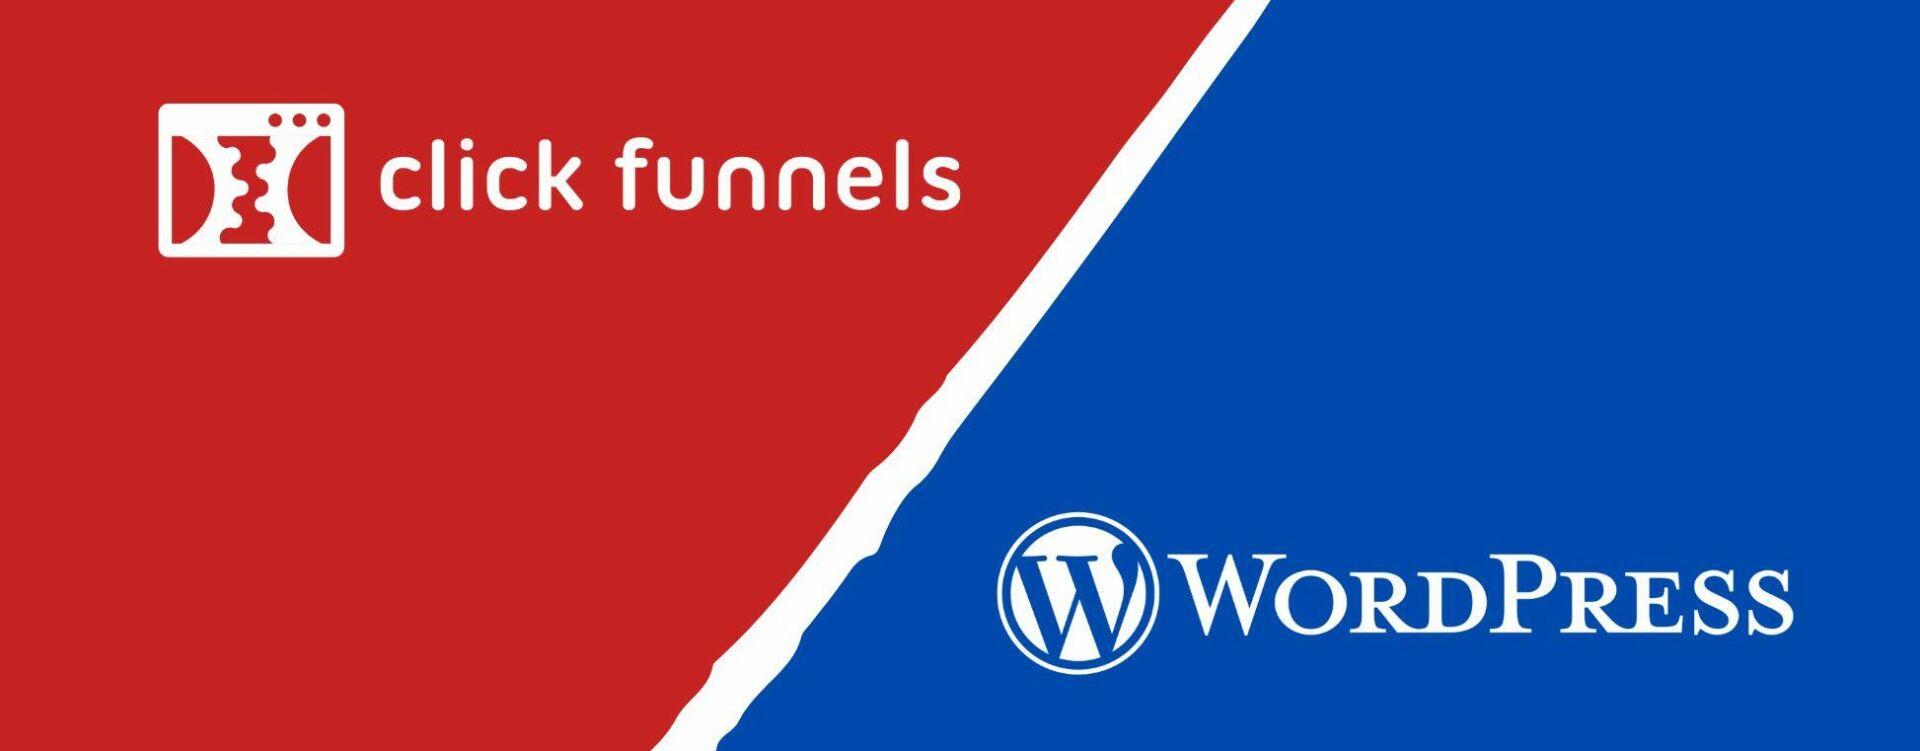 WordPress vs ClickFunnels